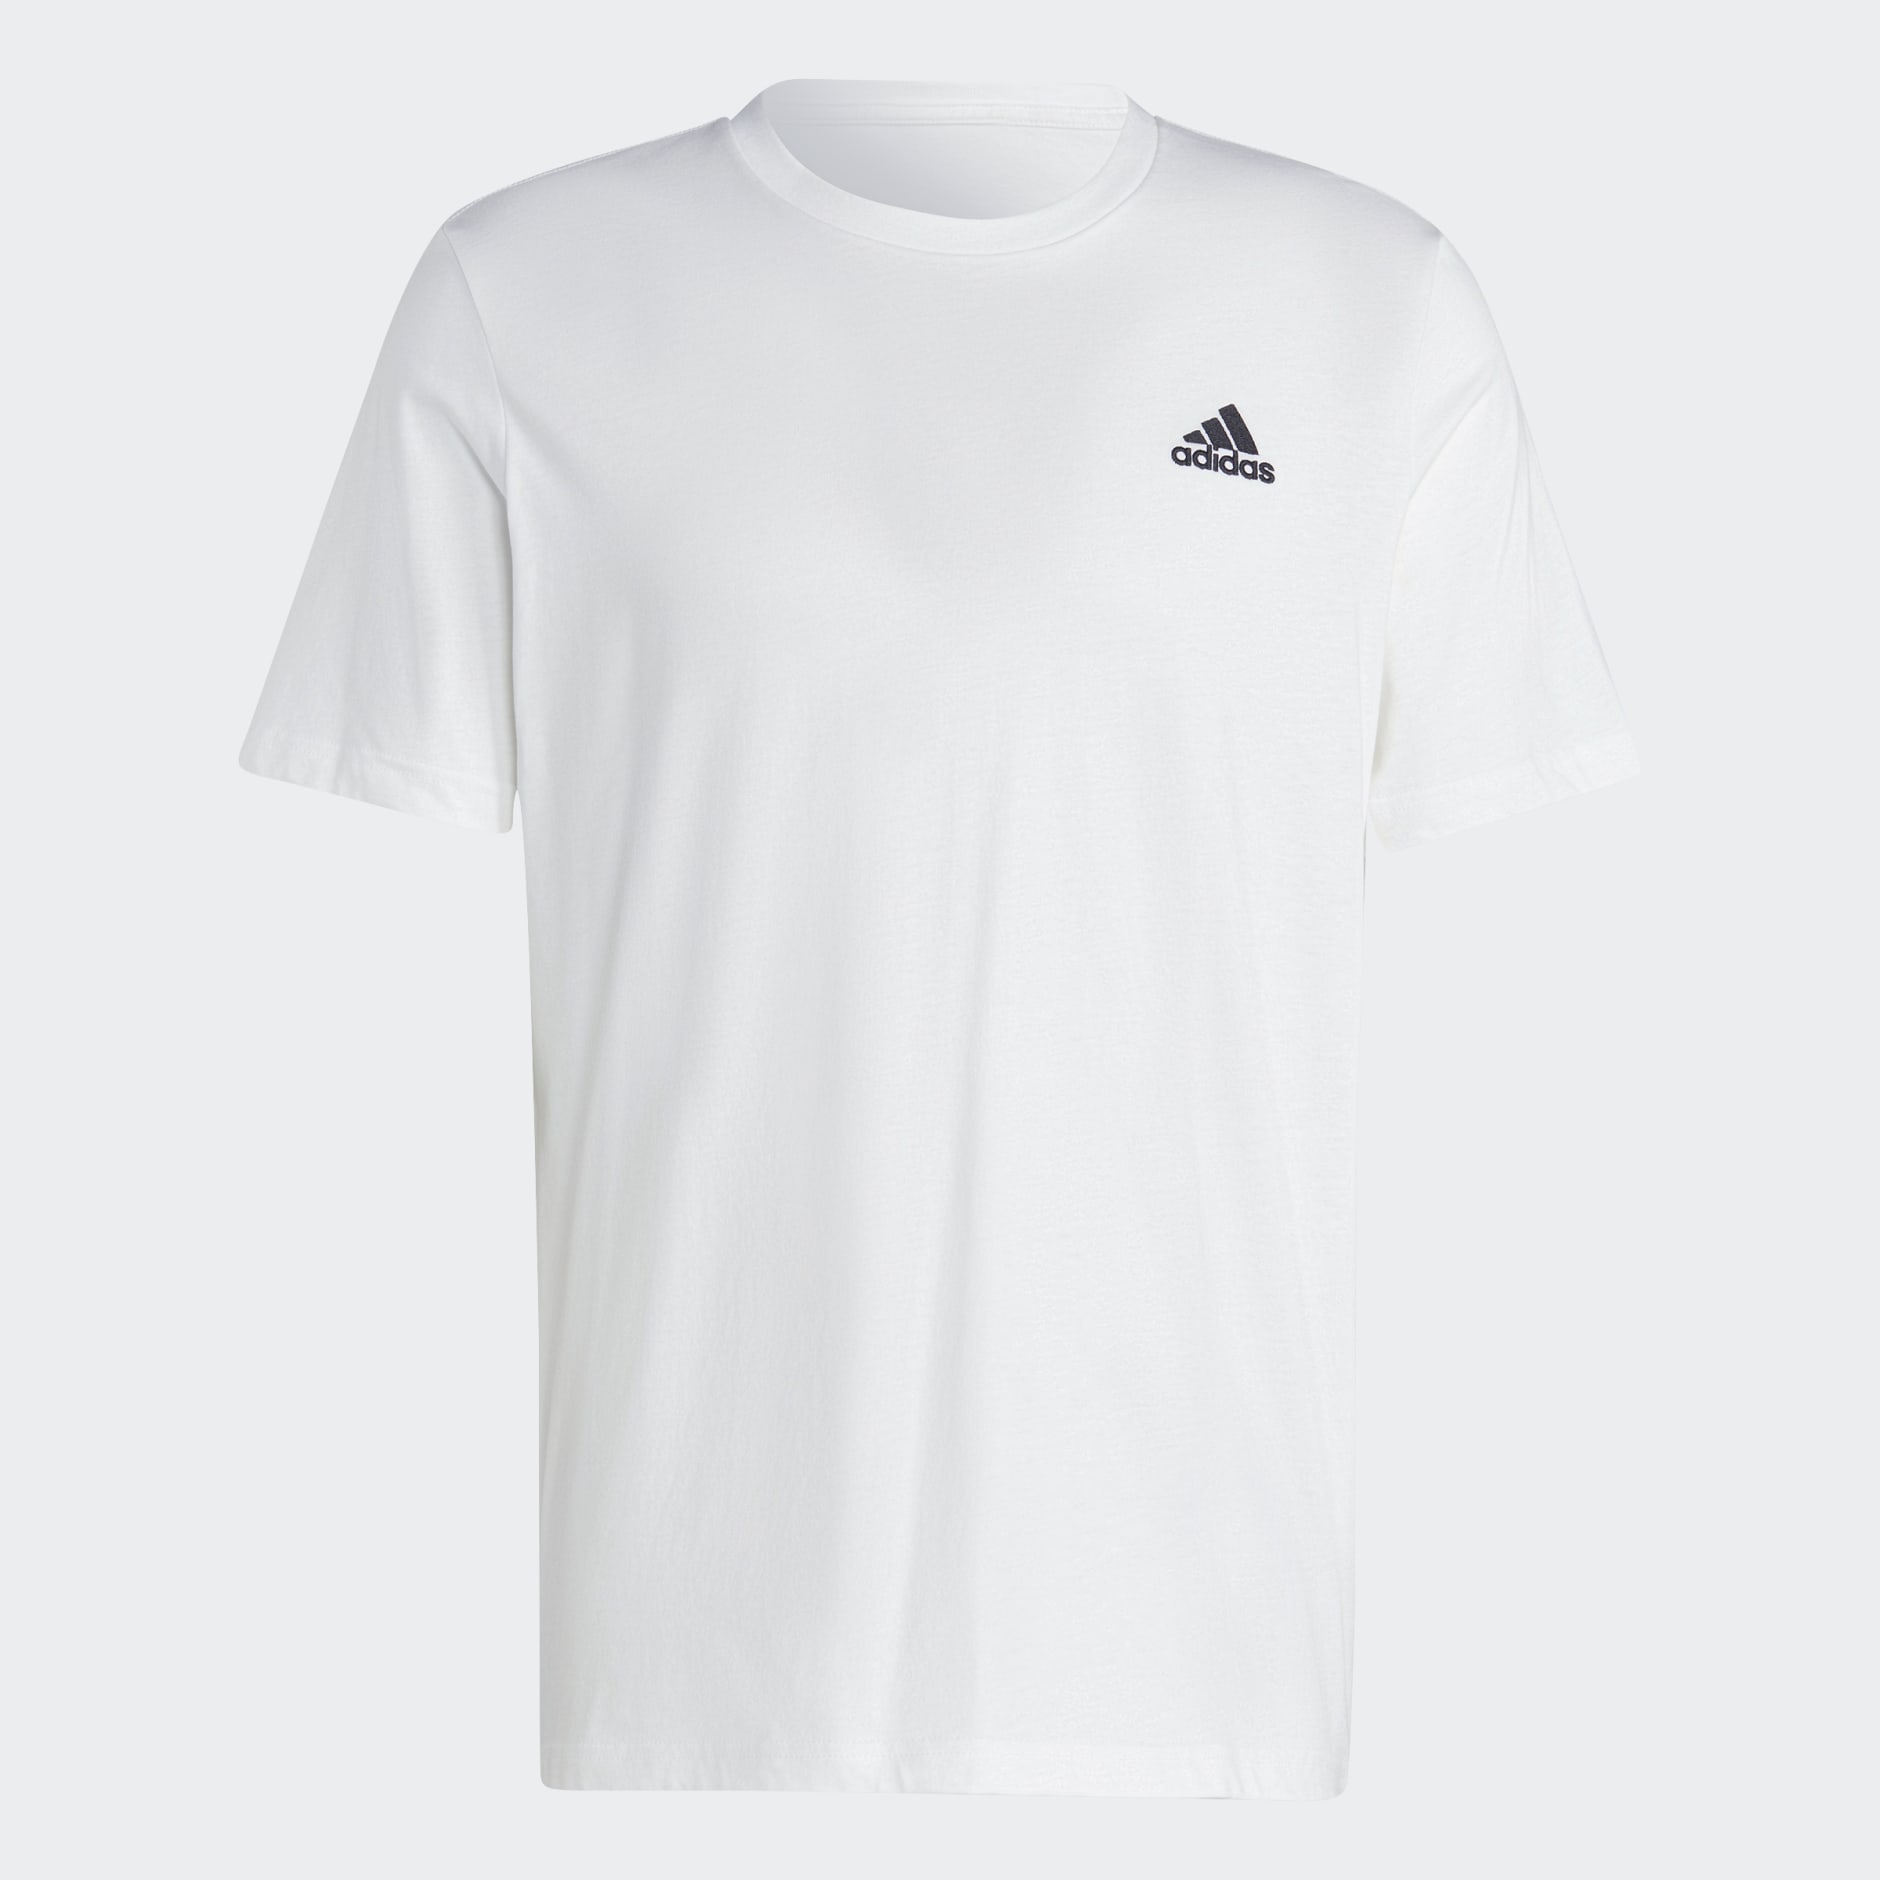 Logo - White Tee Single Jersey Small | Essentials adidas - Embroidered Arabia Clothing Saudi Men\'s